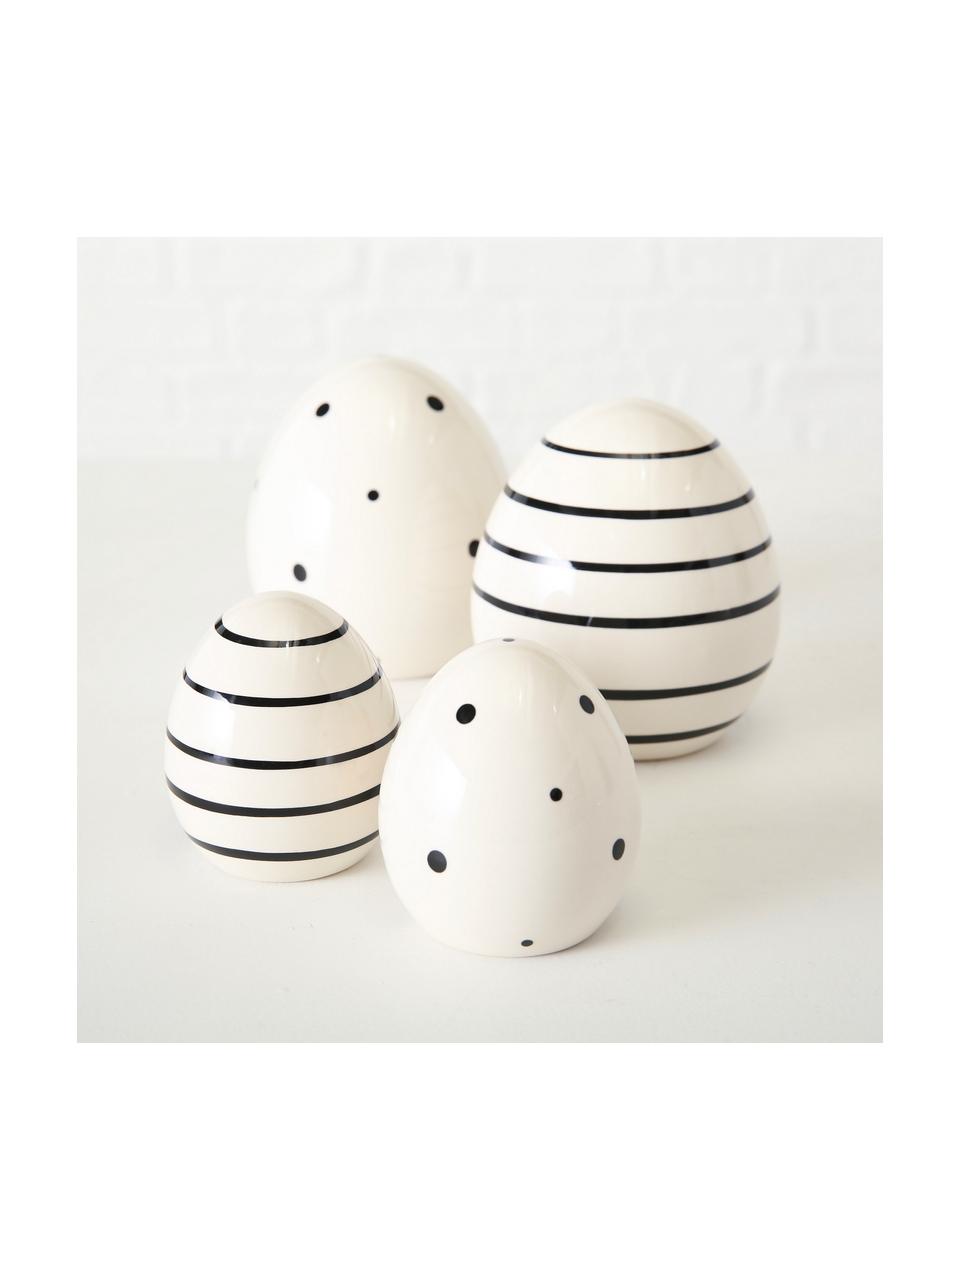 Set de piezas decorativas Finn, 2 pzas., Gres, Blanco, negro, Ø 7 x Al 8 cm